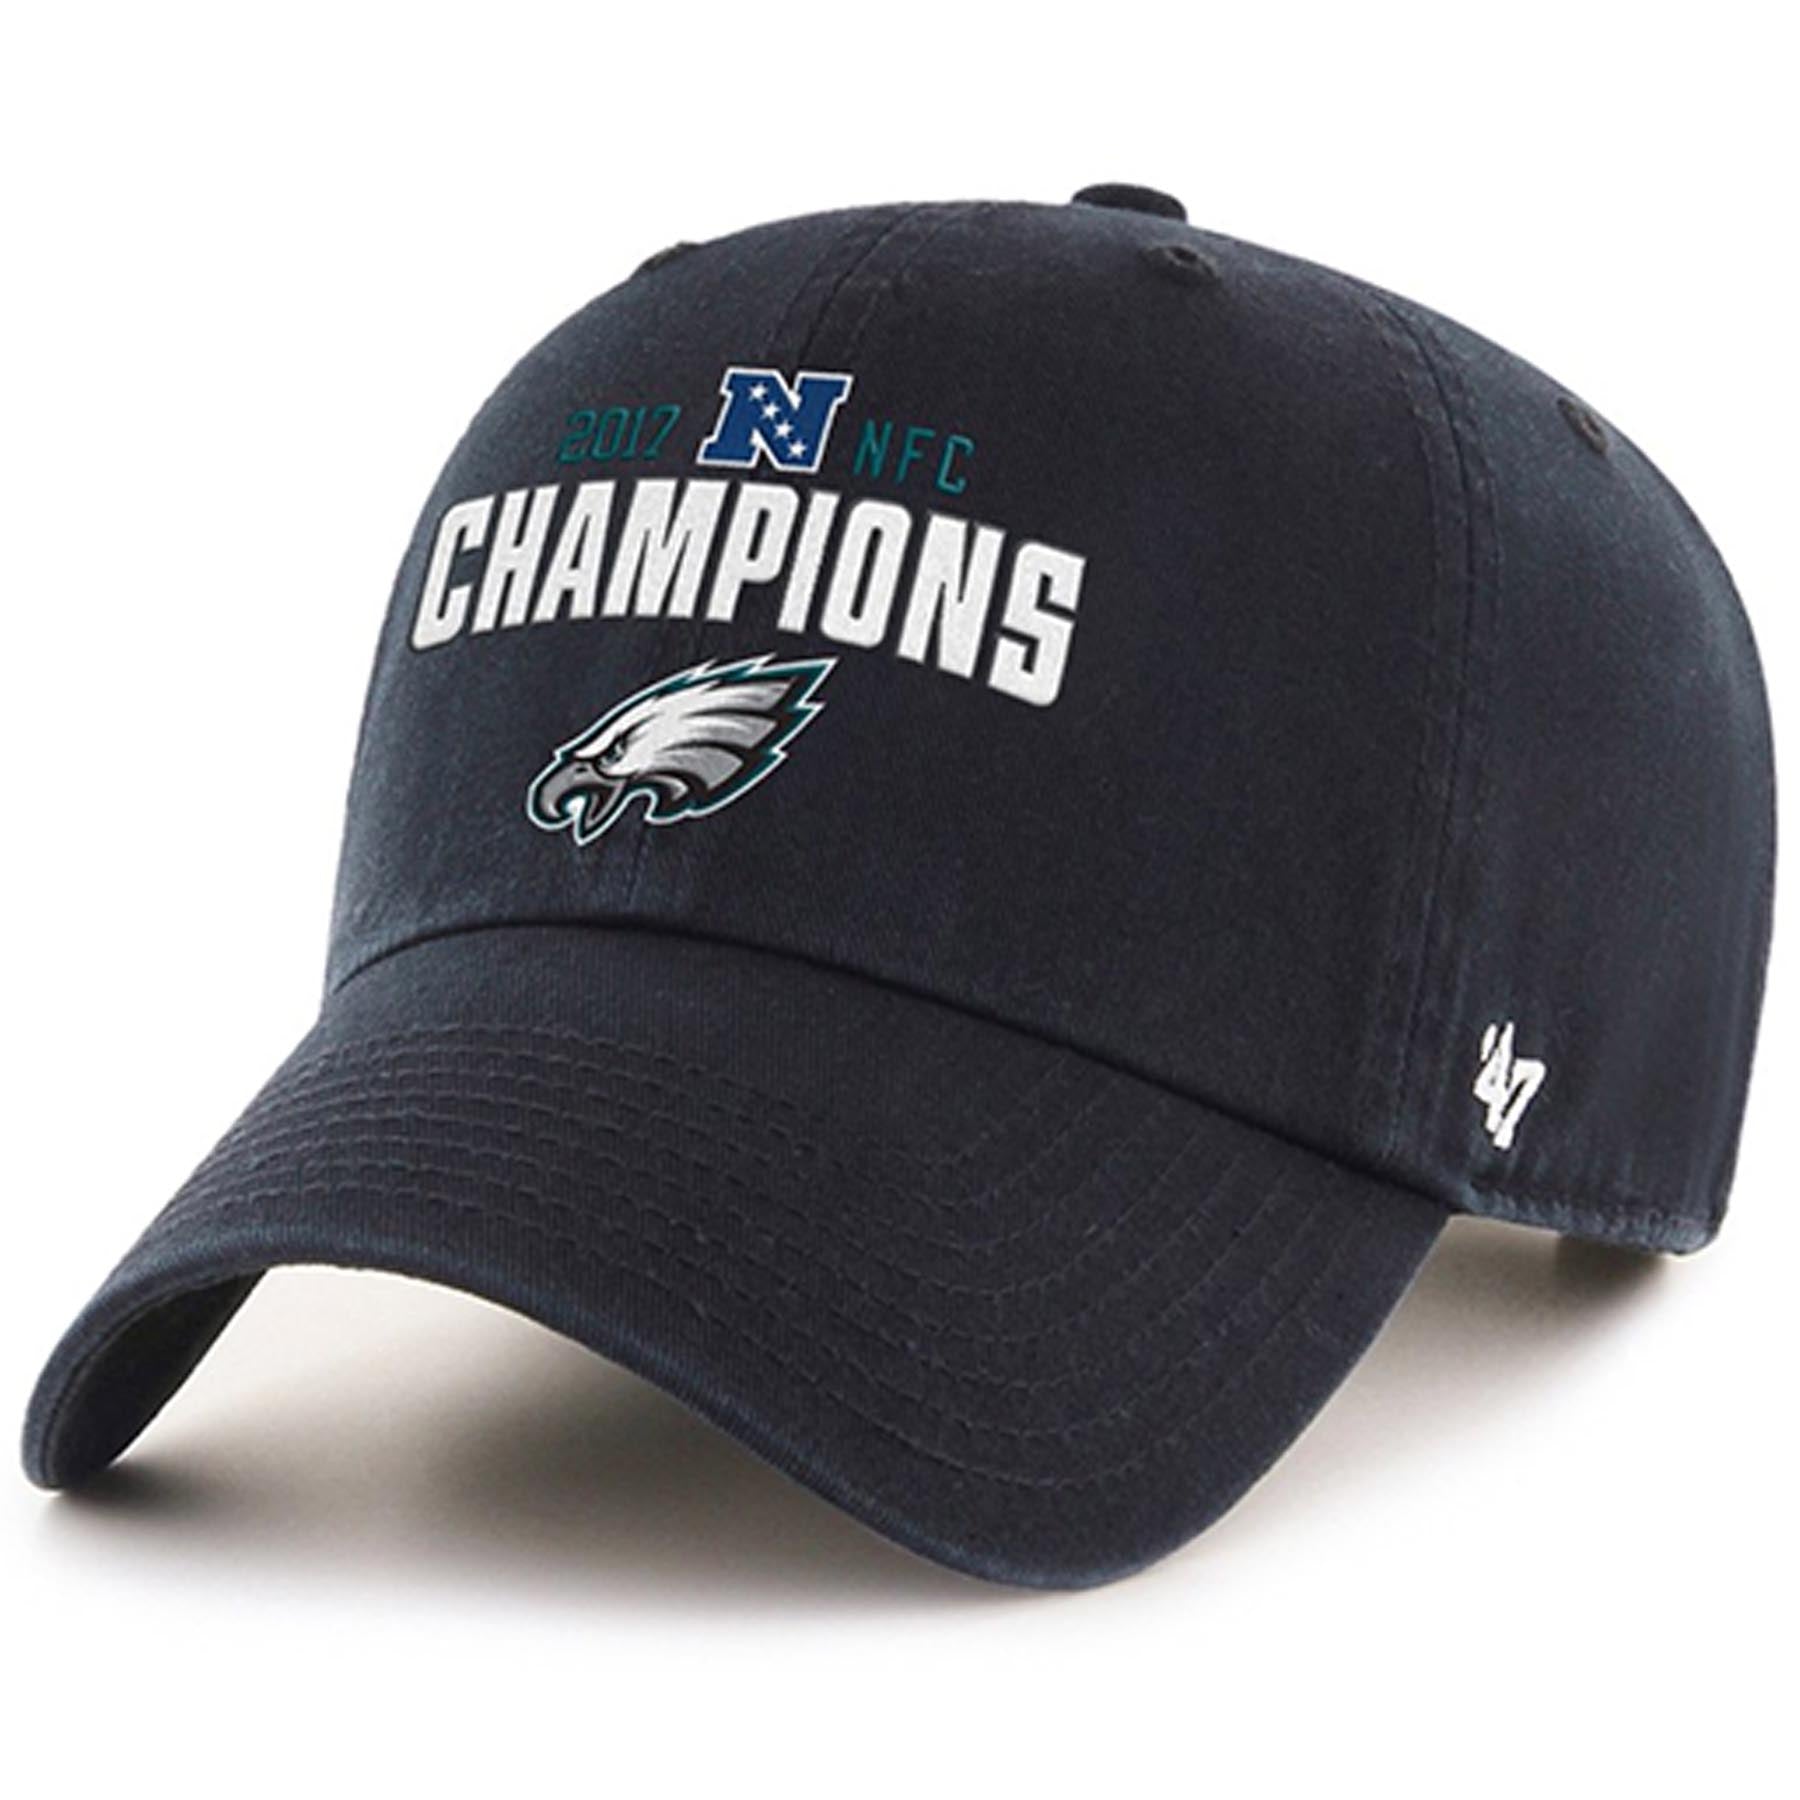 eagles championship hat